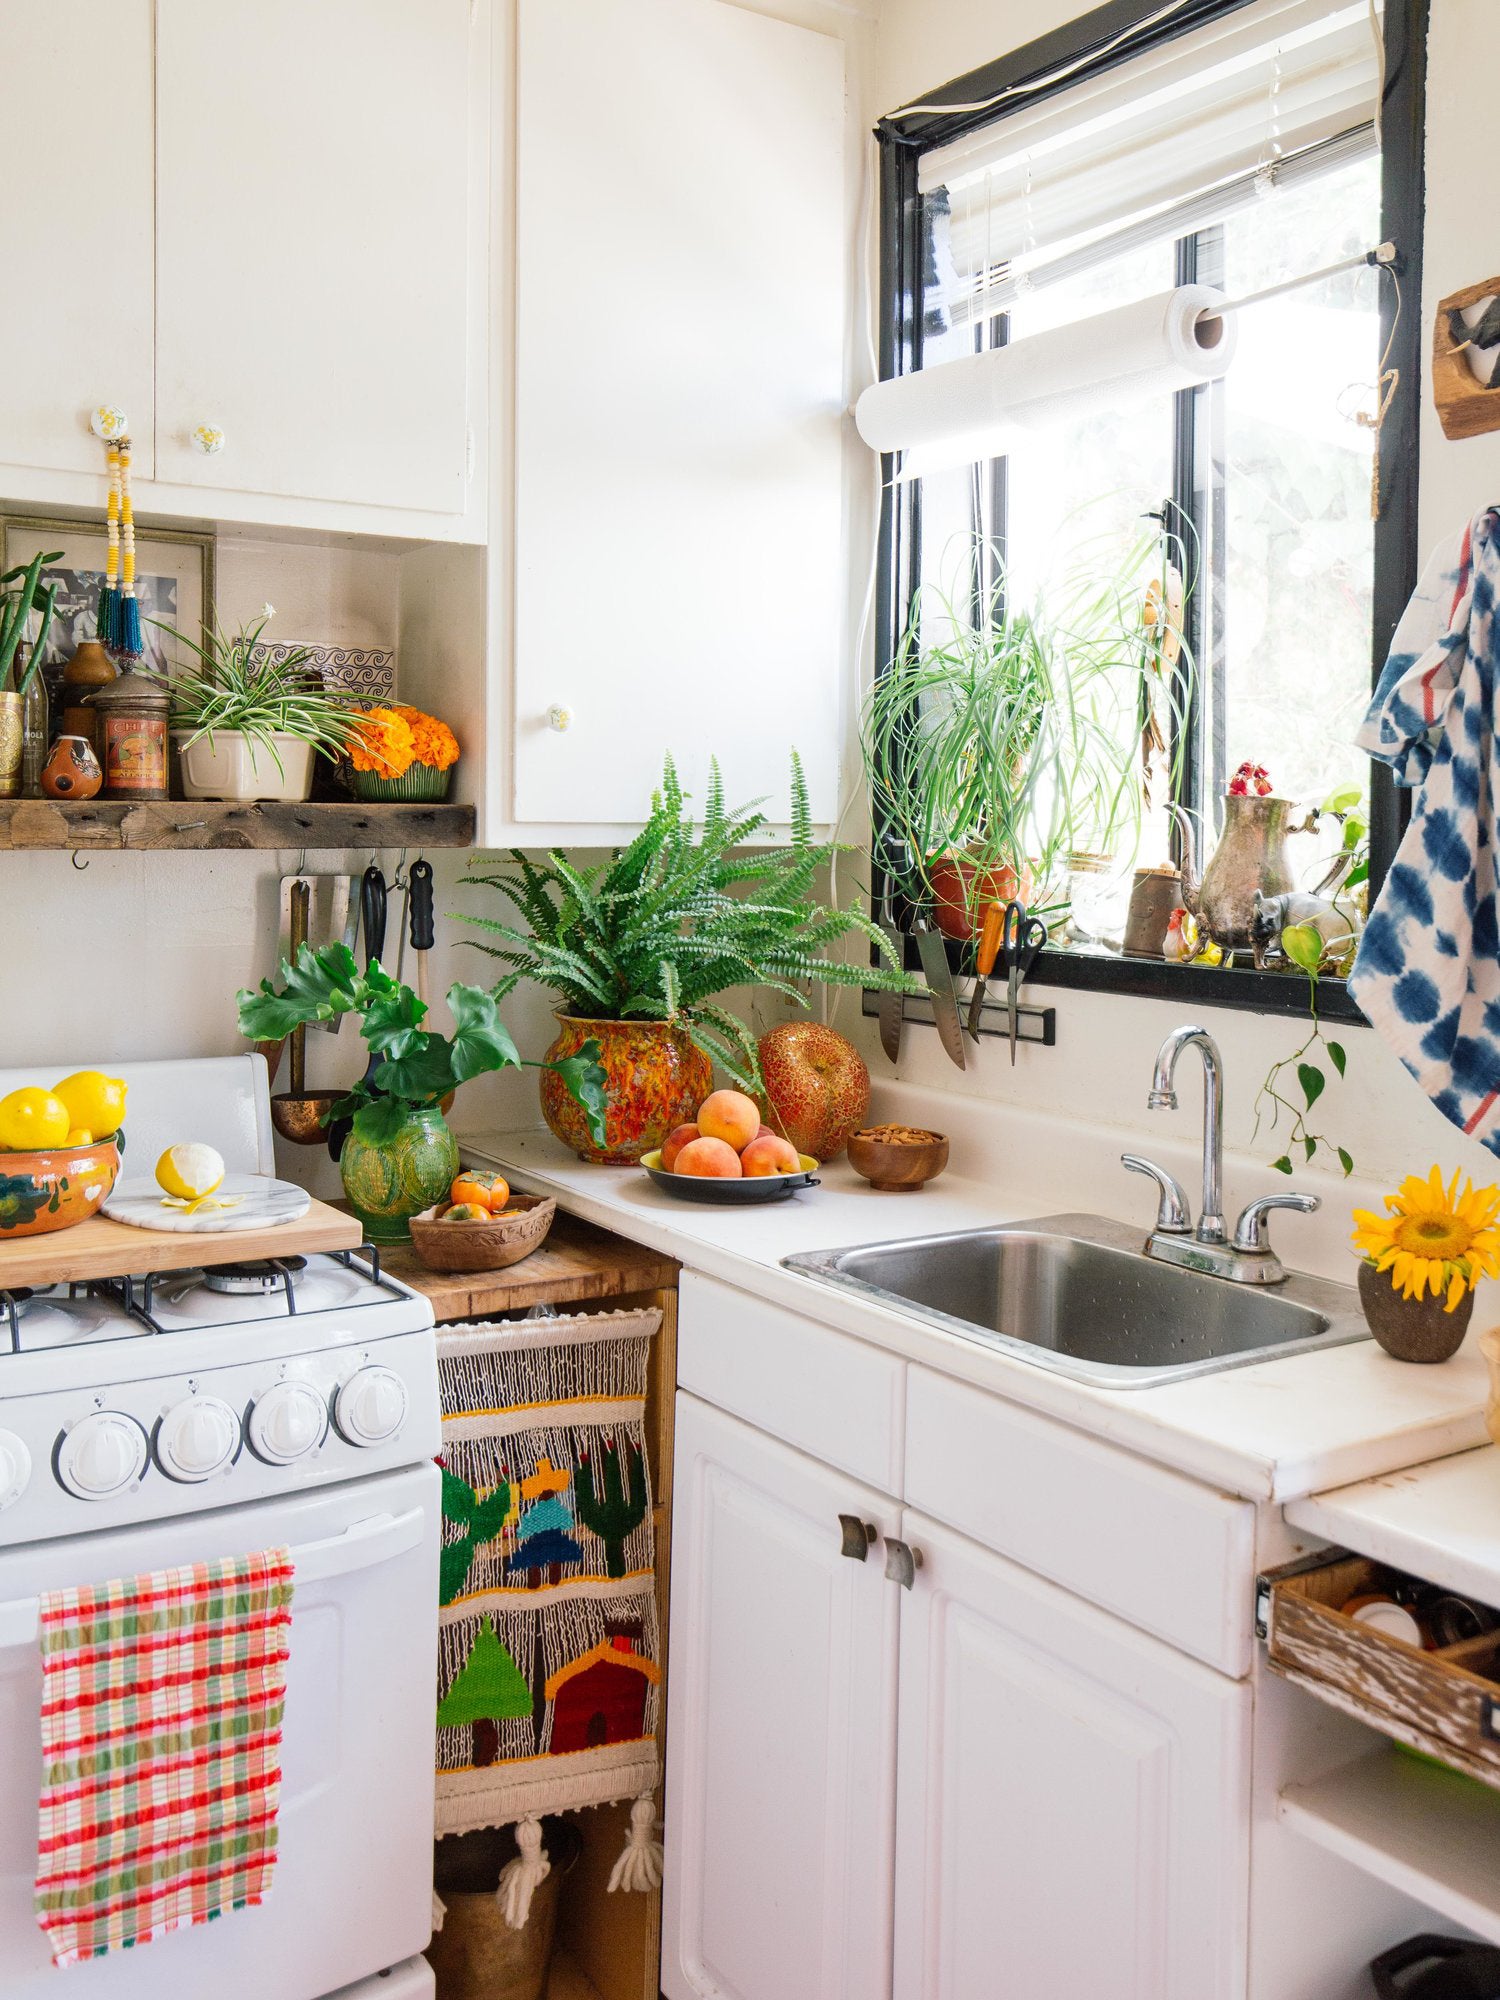 8 Tiny House Kitchen Ideas To Help You